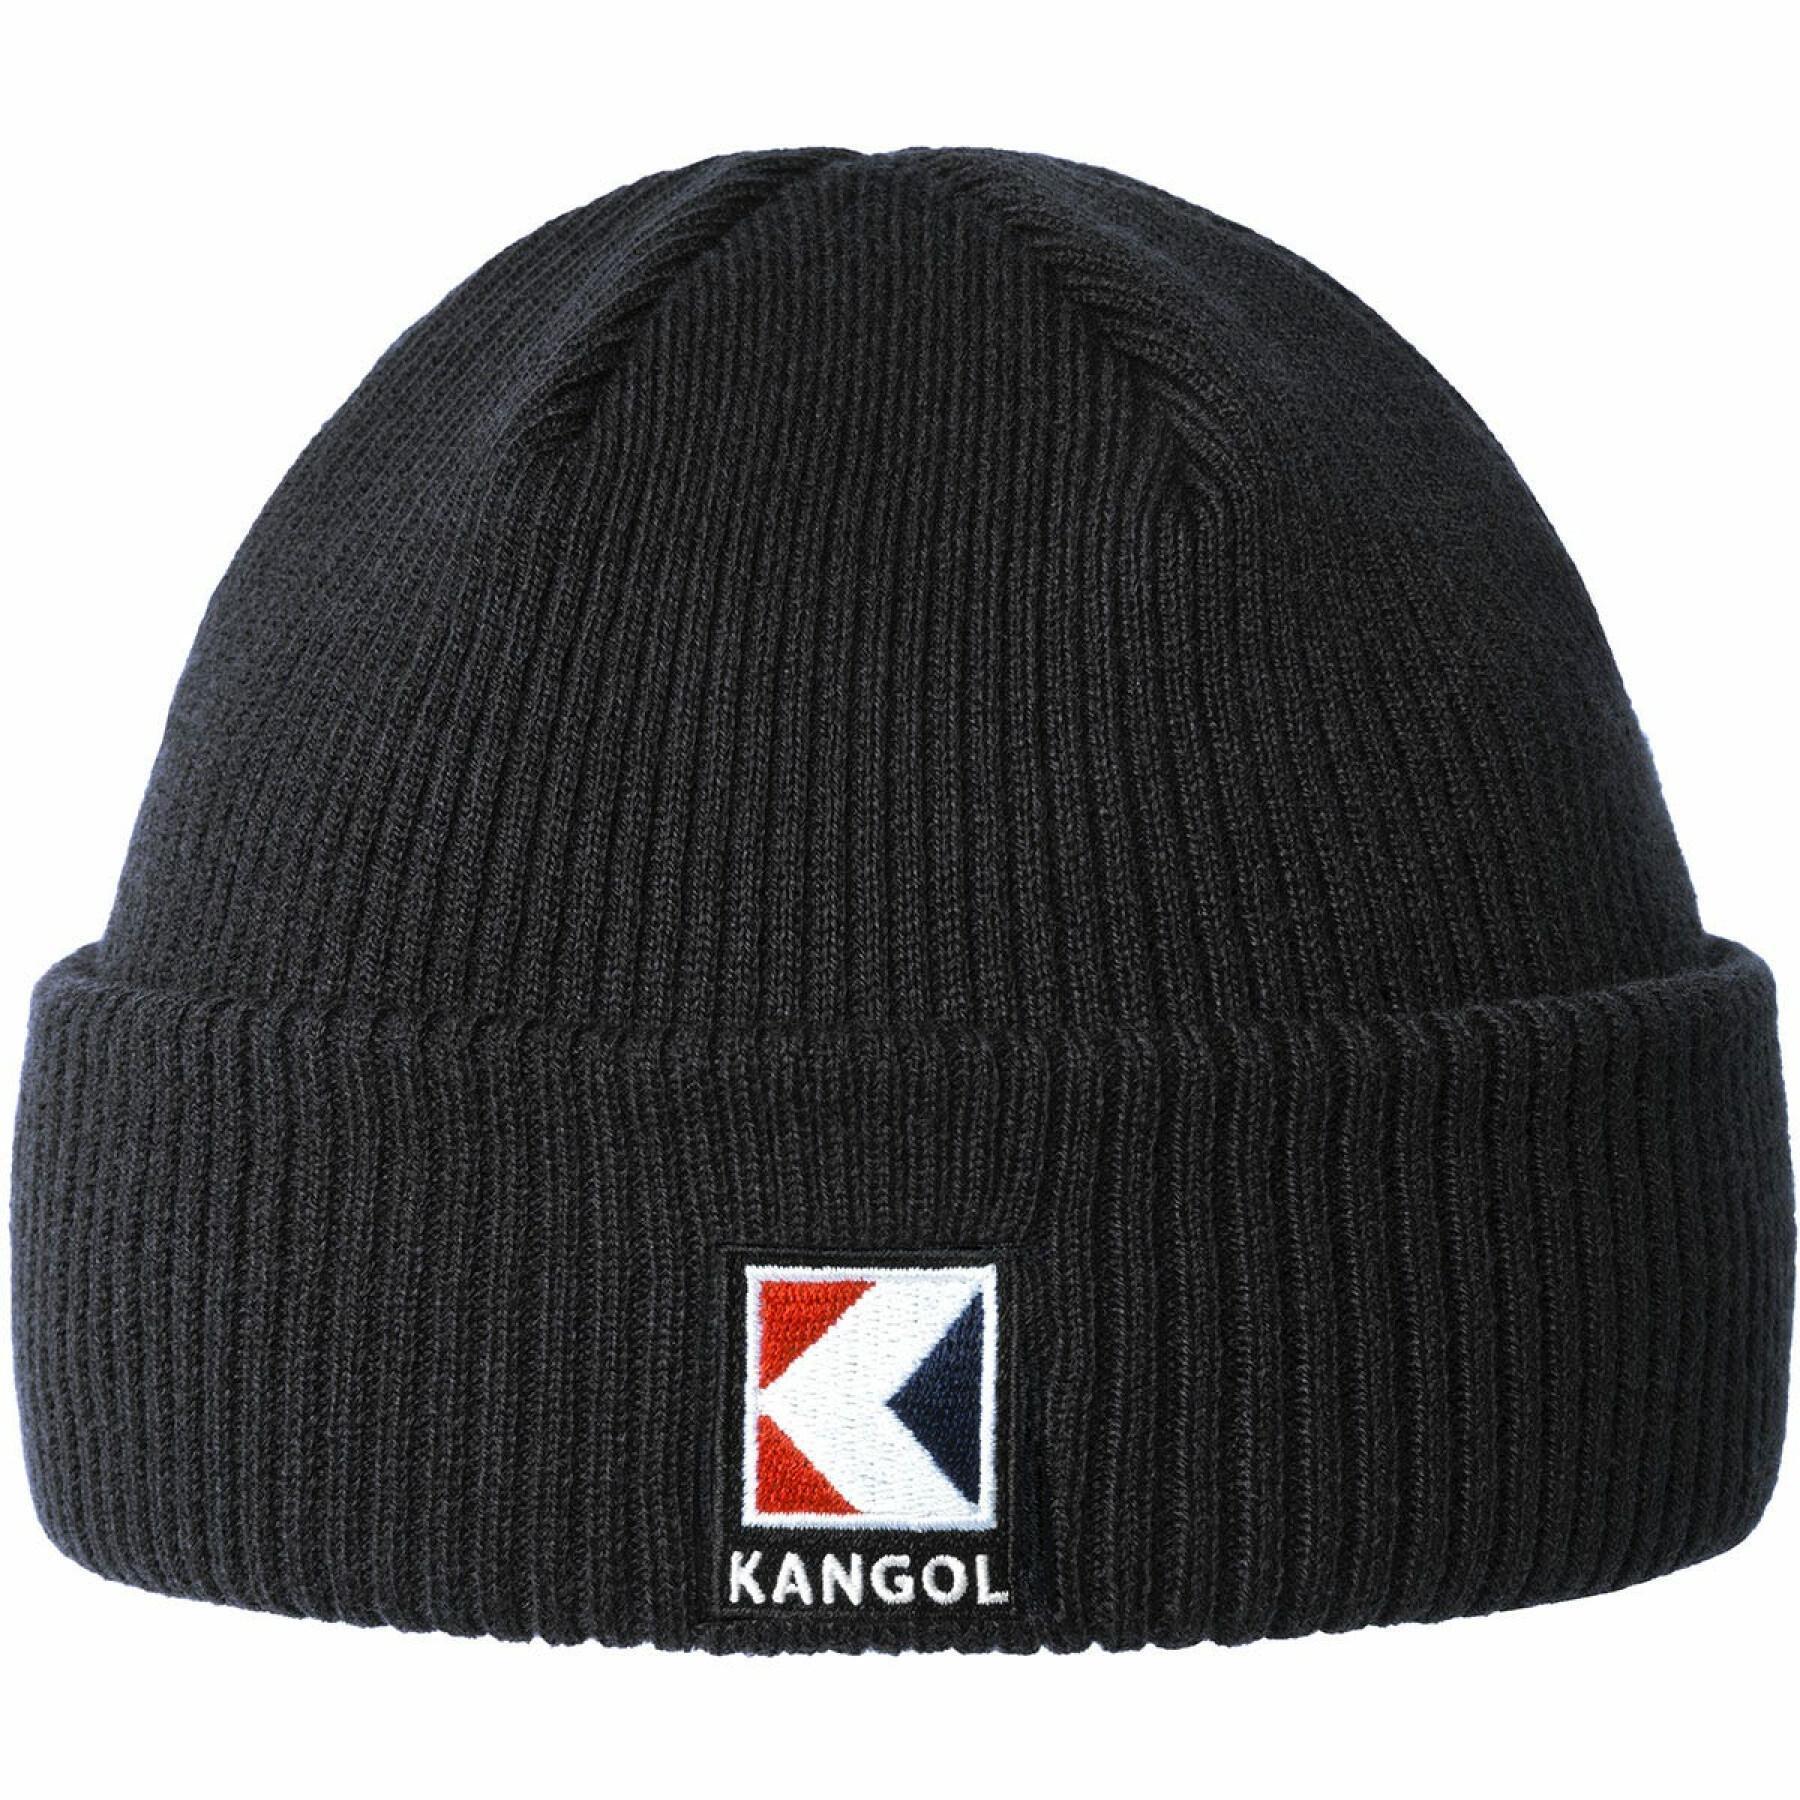 Cap Kangol Service K 